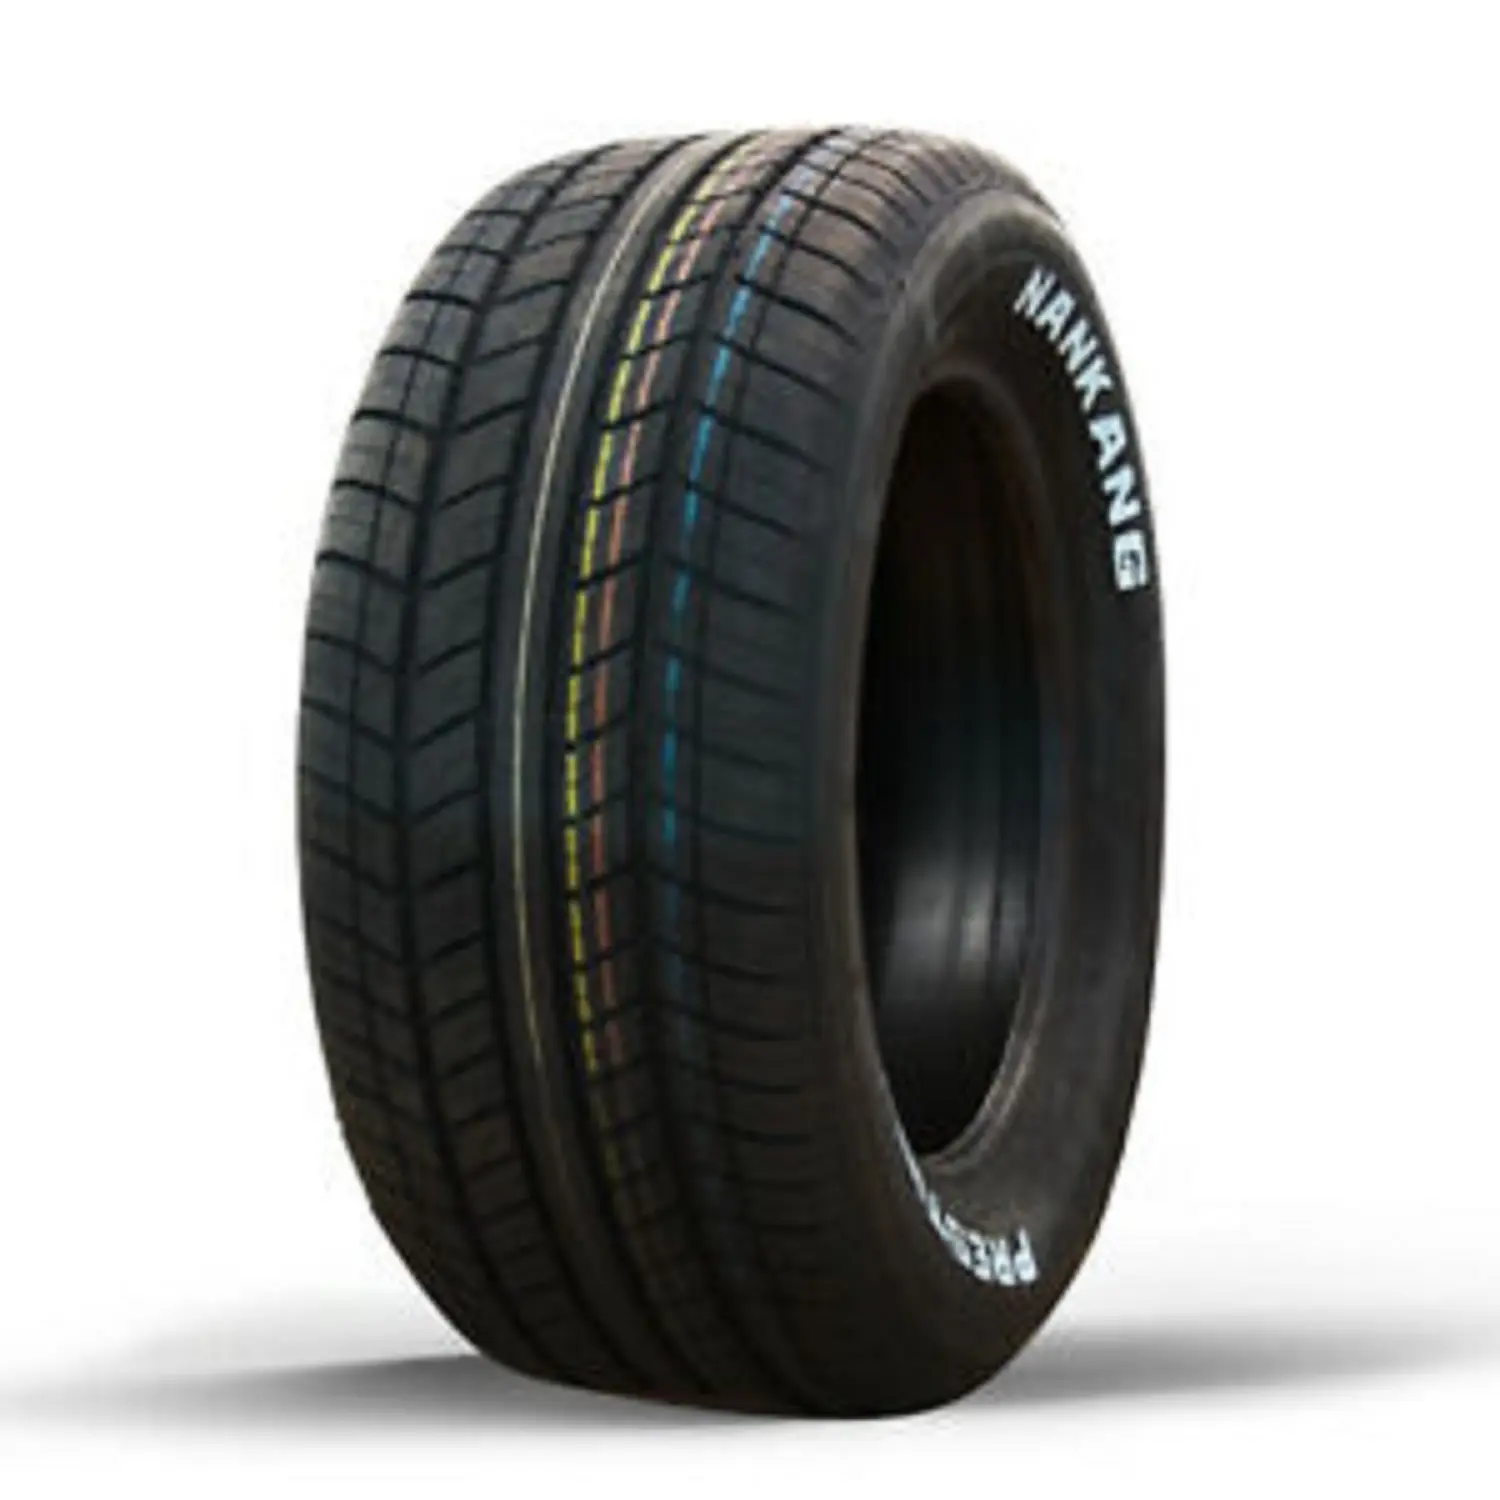 Entrega rápida CarTires tamaños 13 "14" 10 "21 Todo listo para exportar Compre neumáticos usados Tamaños 215/60R17 13 para PRI barato